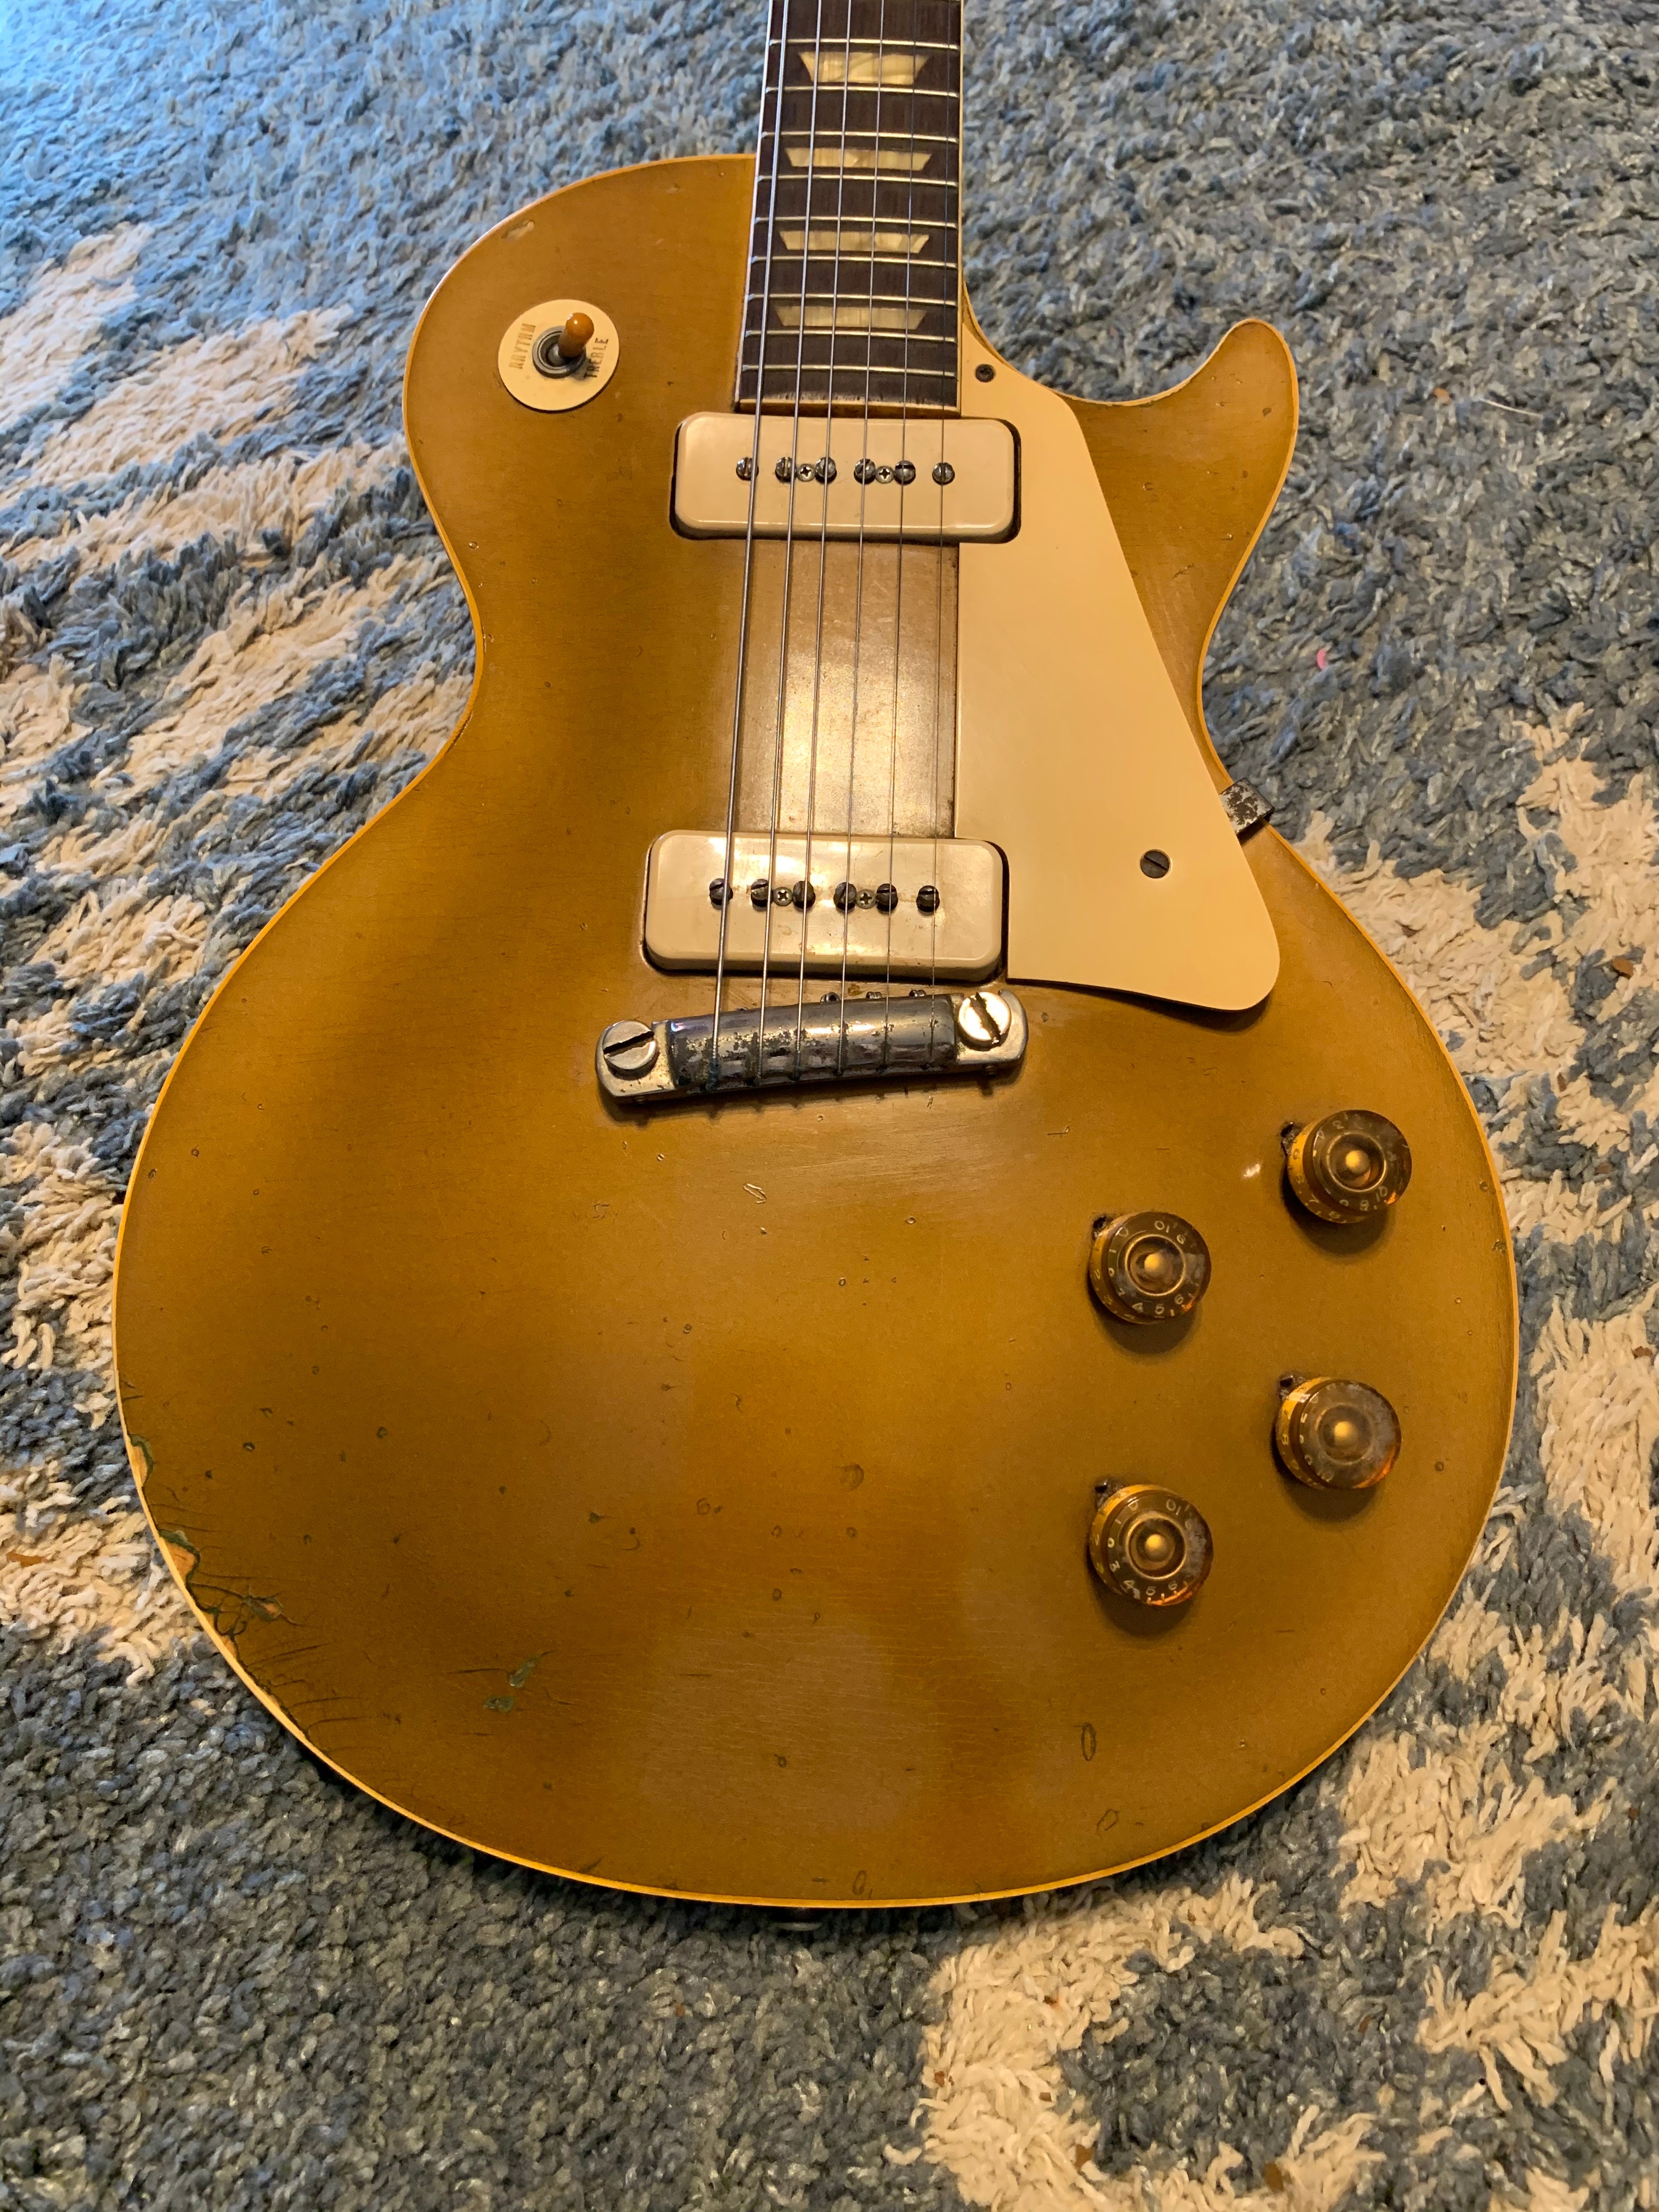 Vintage Gibson Les Paul guitar appraisal